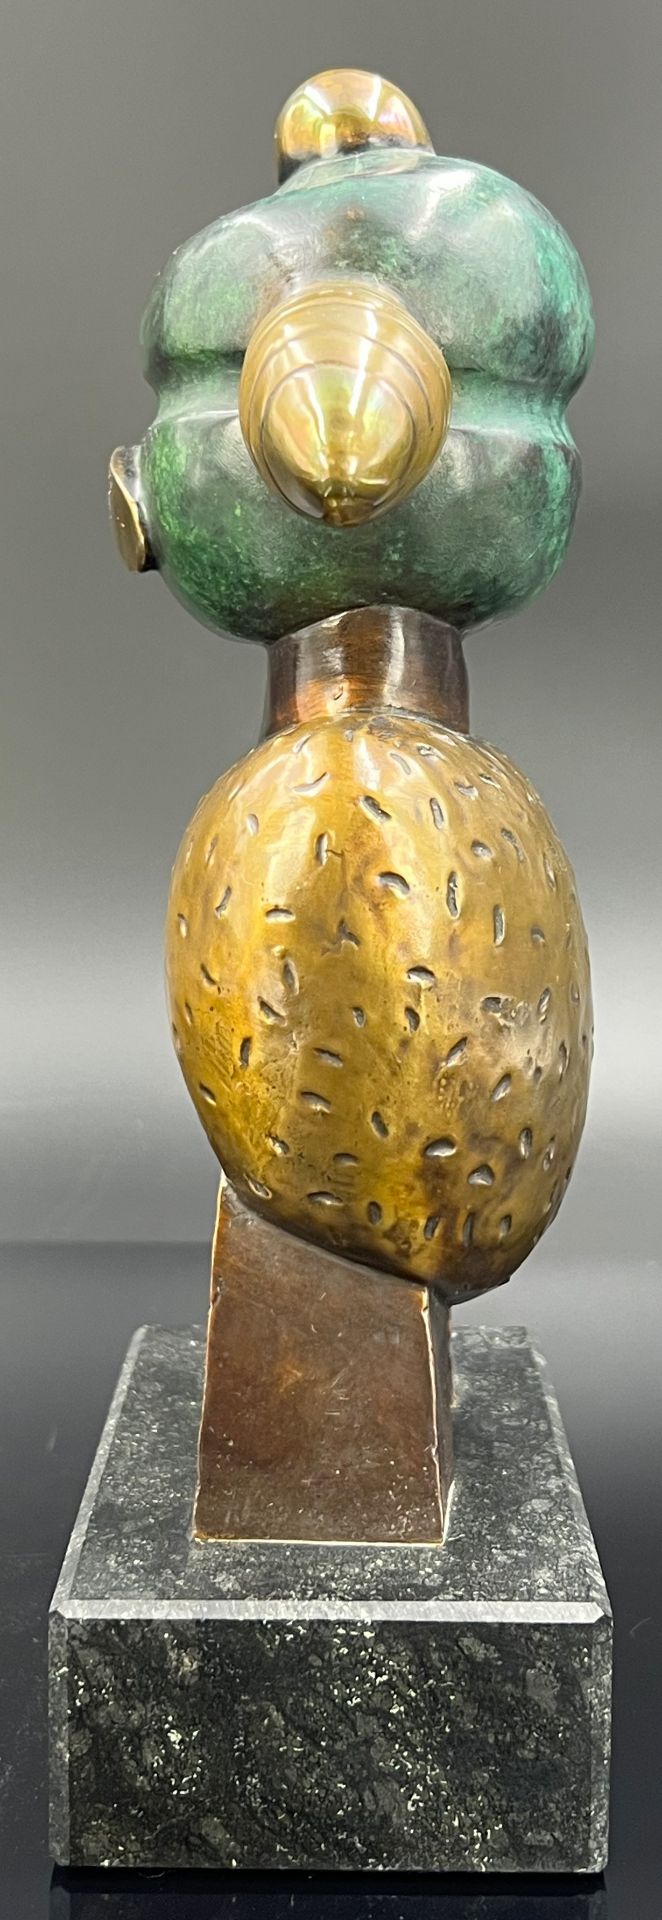 Otmar ALT (1940). Bronze. "King of the bees". 2005. - Image 2 of 8